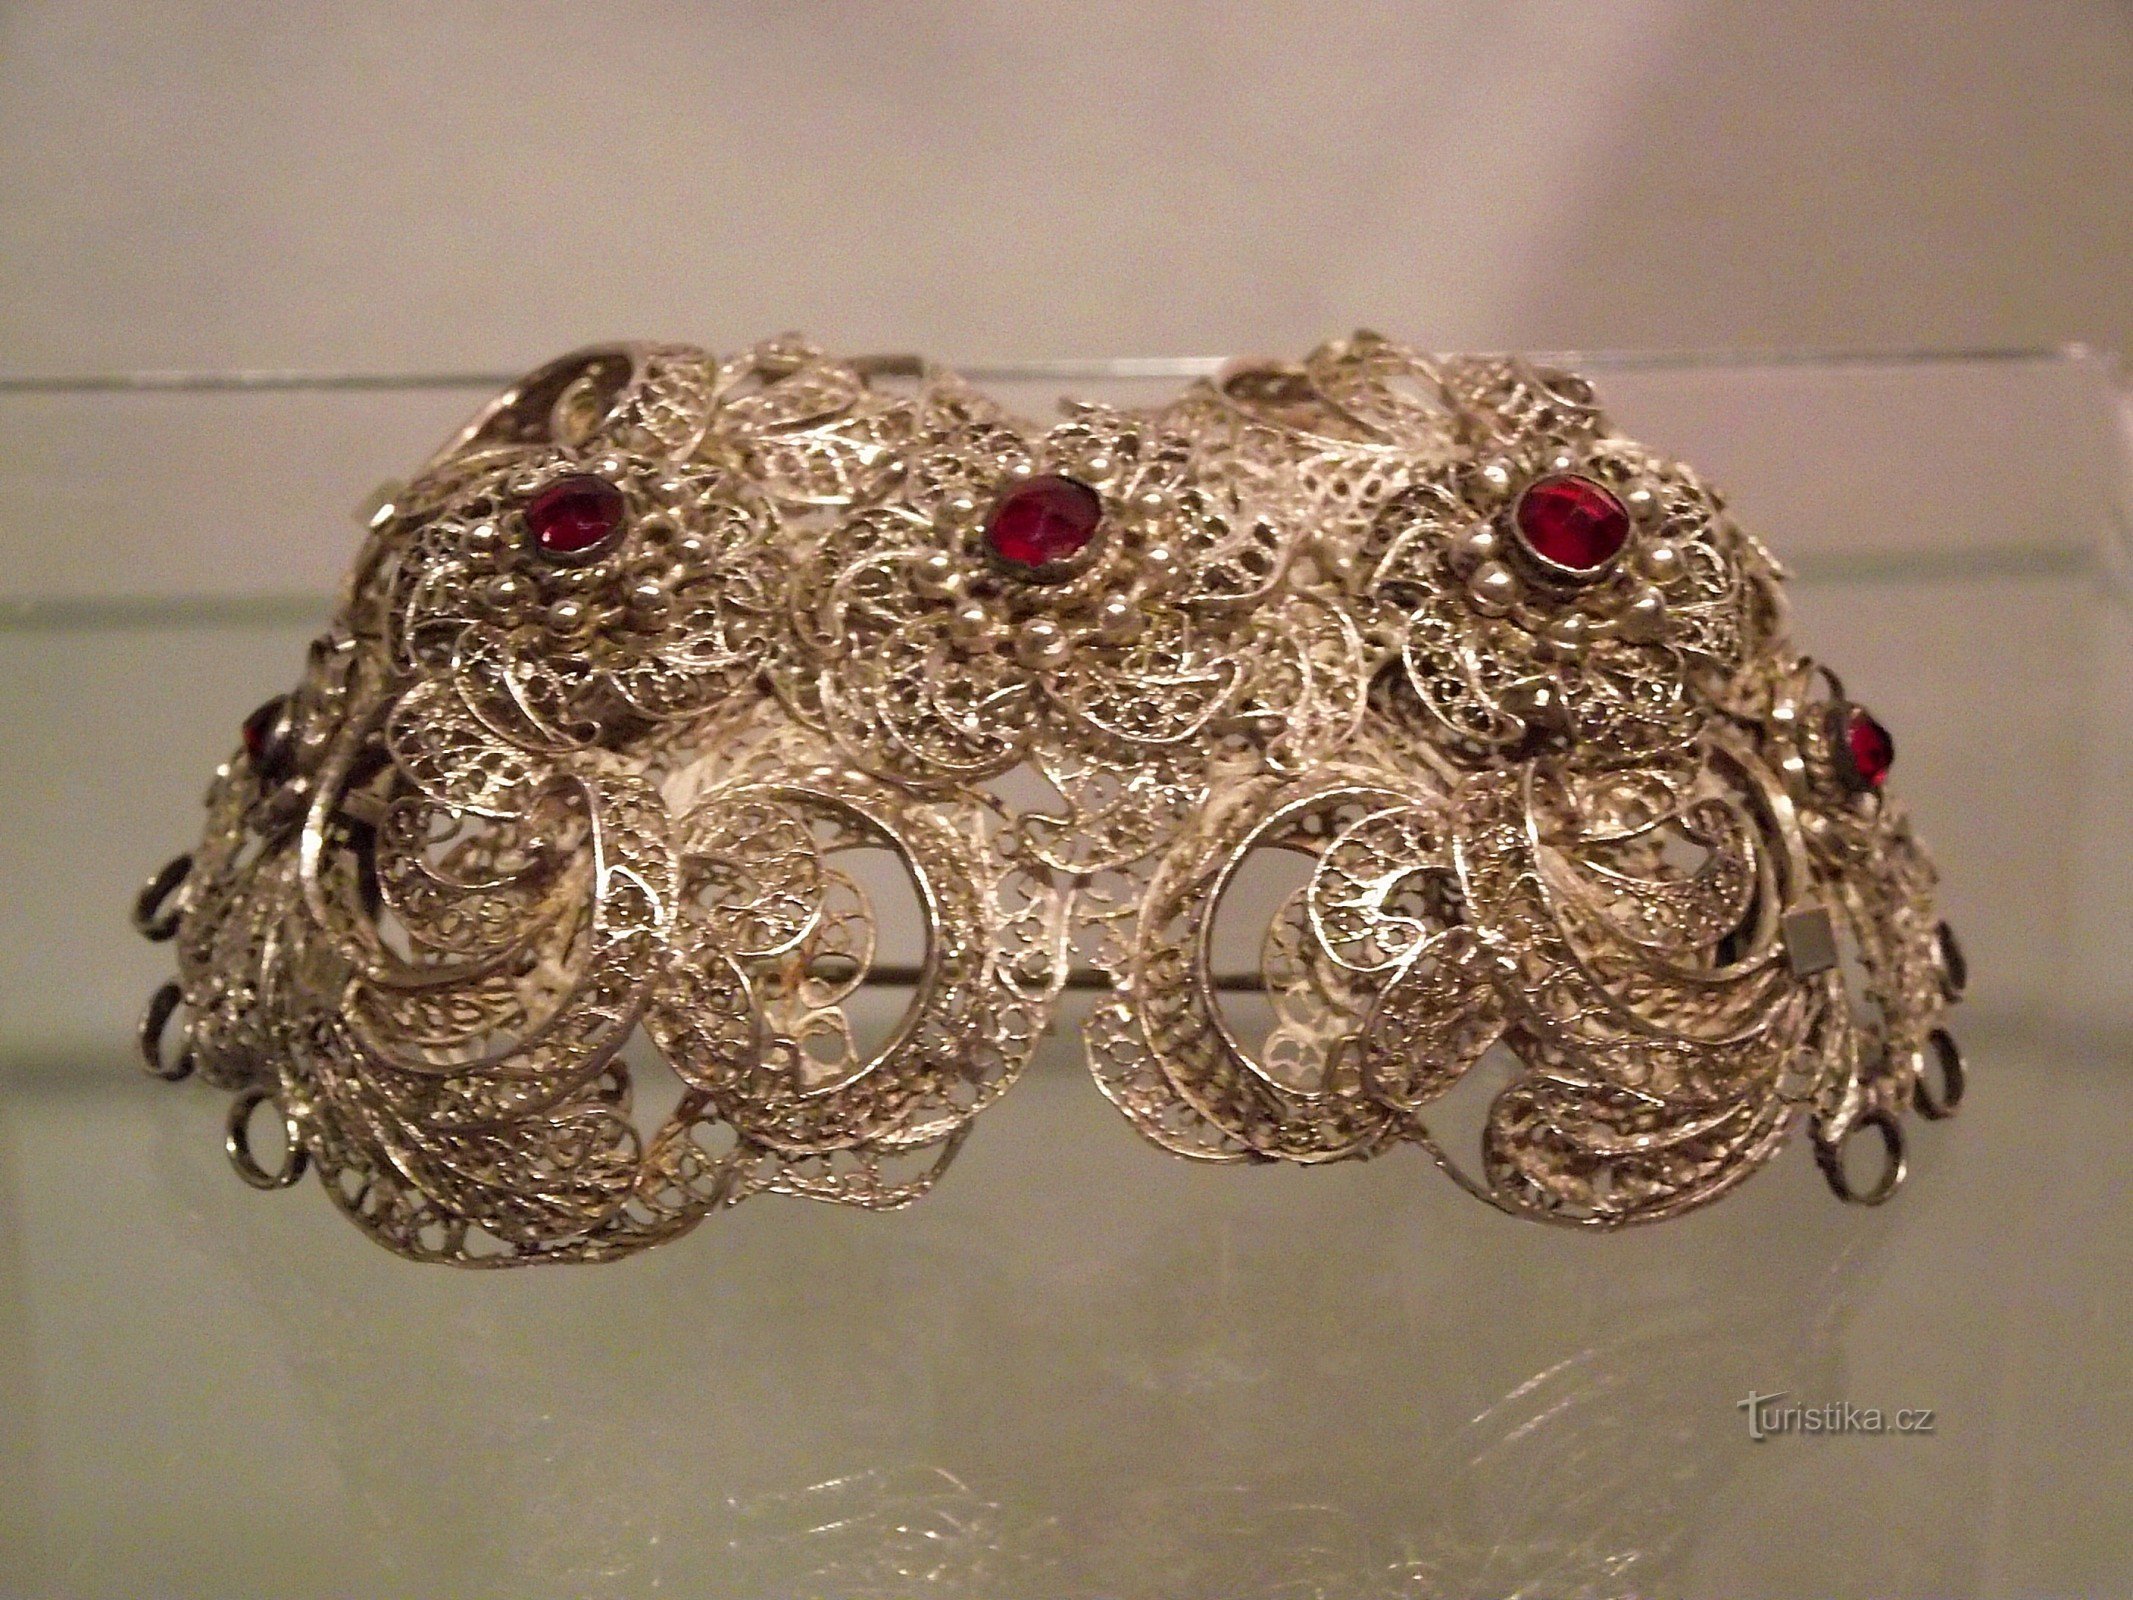 Šumperk museum jewelry box (VM Šumperk)